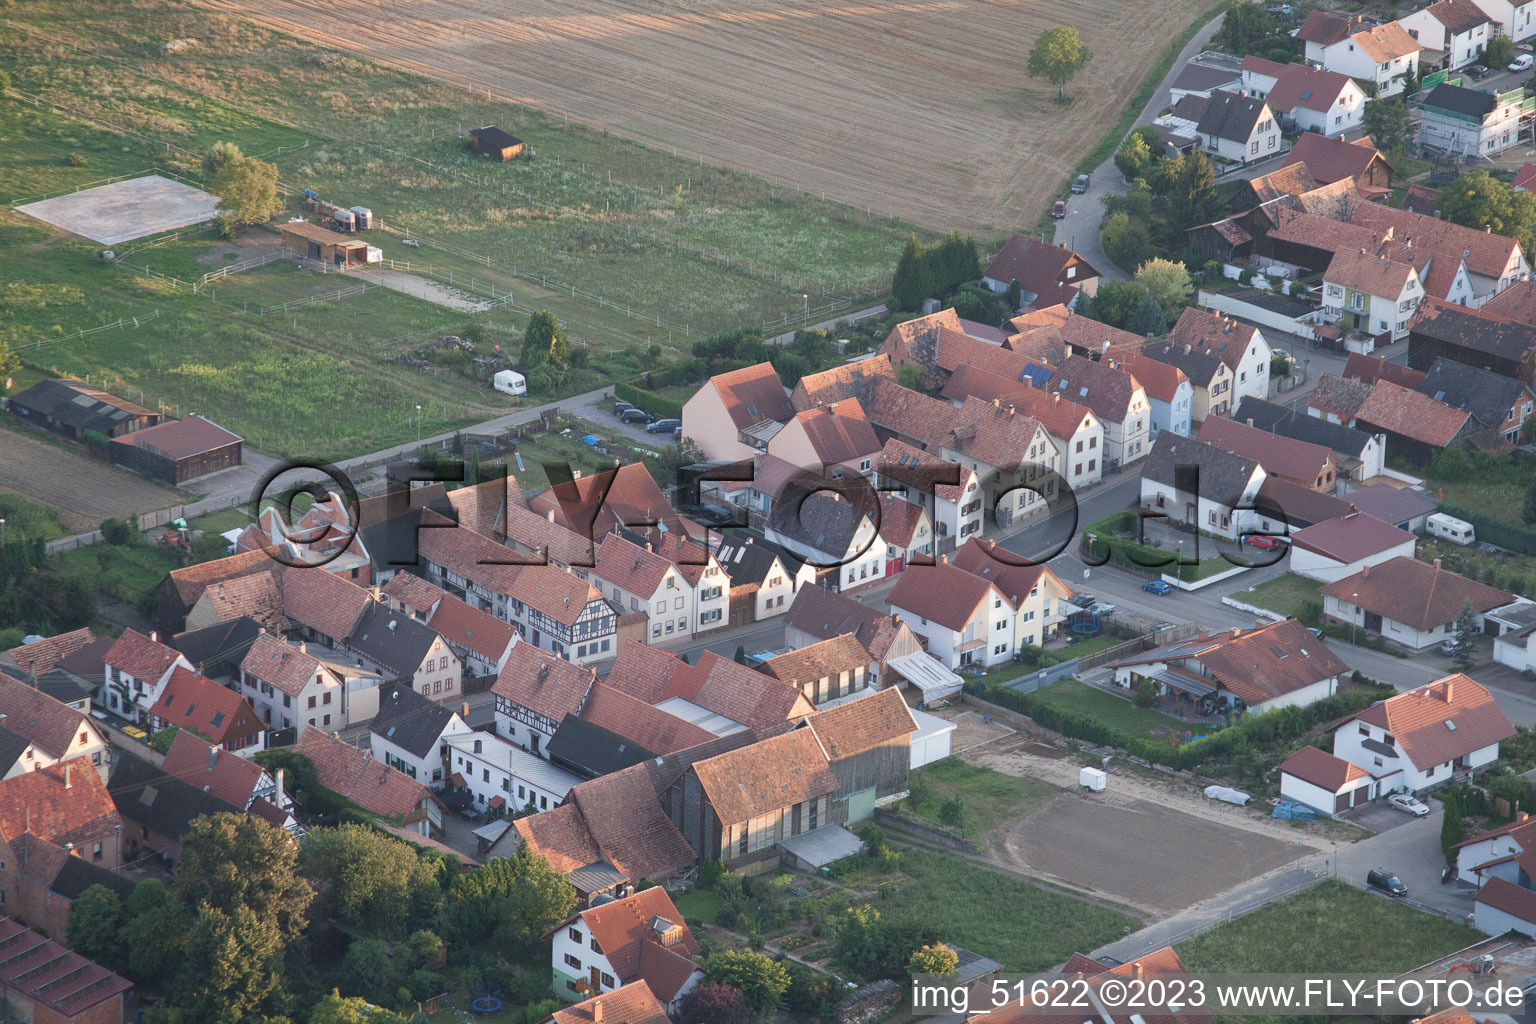 Herxheimweyher in the state Rhineland-Palatinate, Germany from a drone